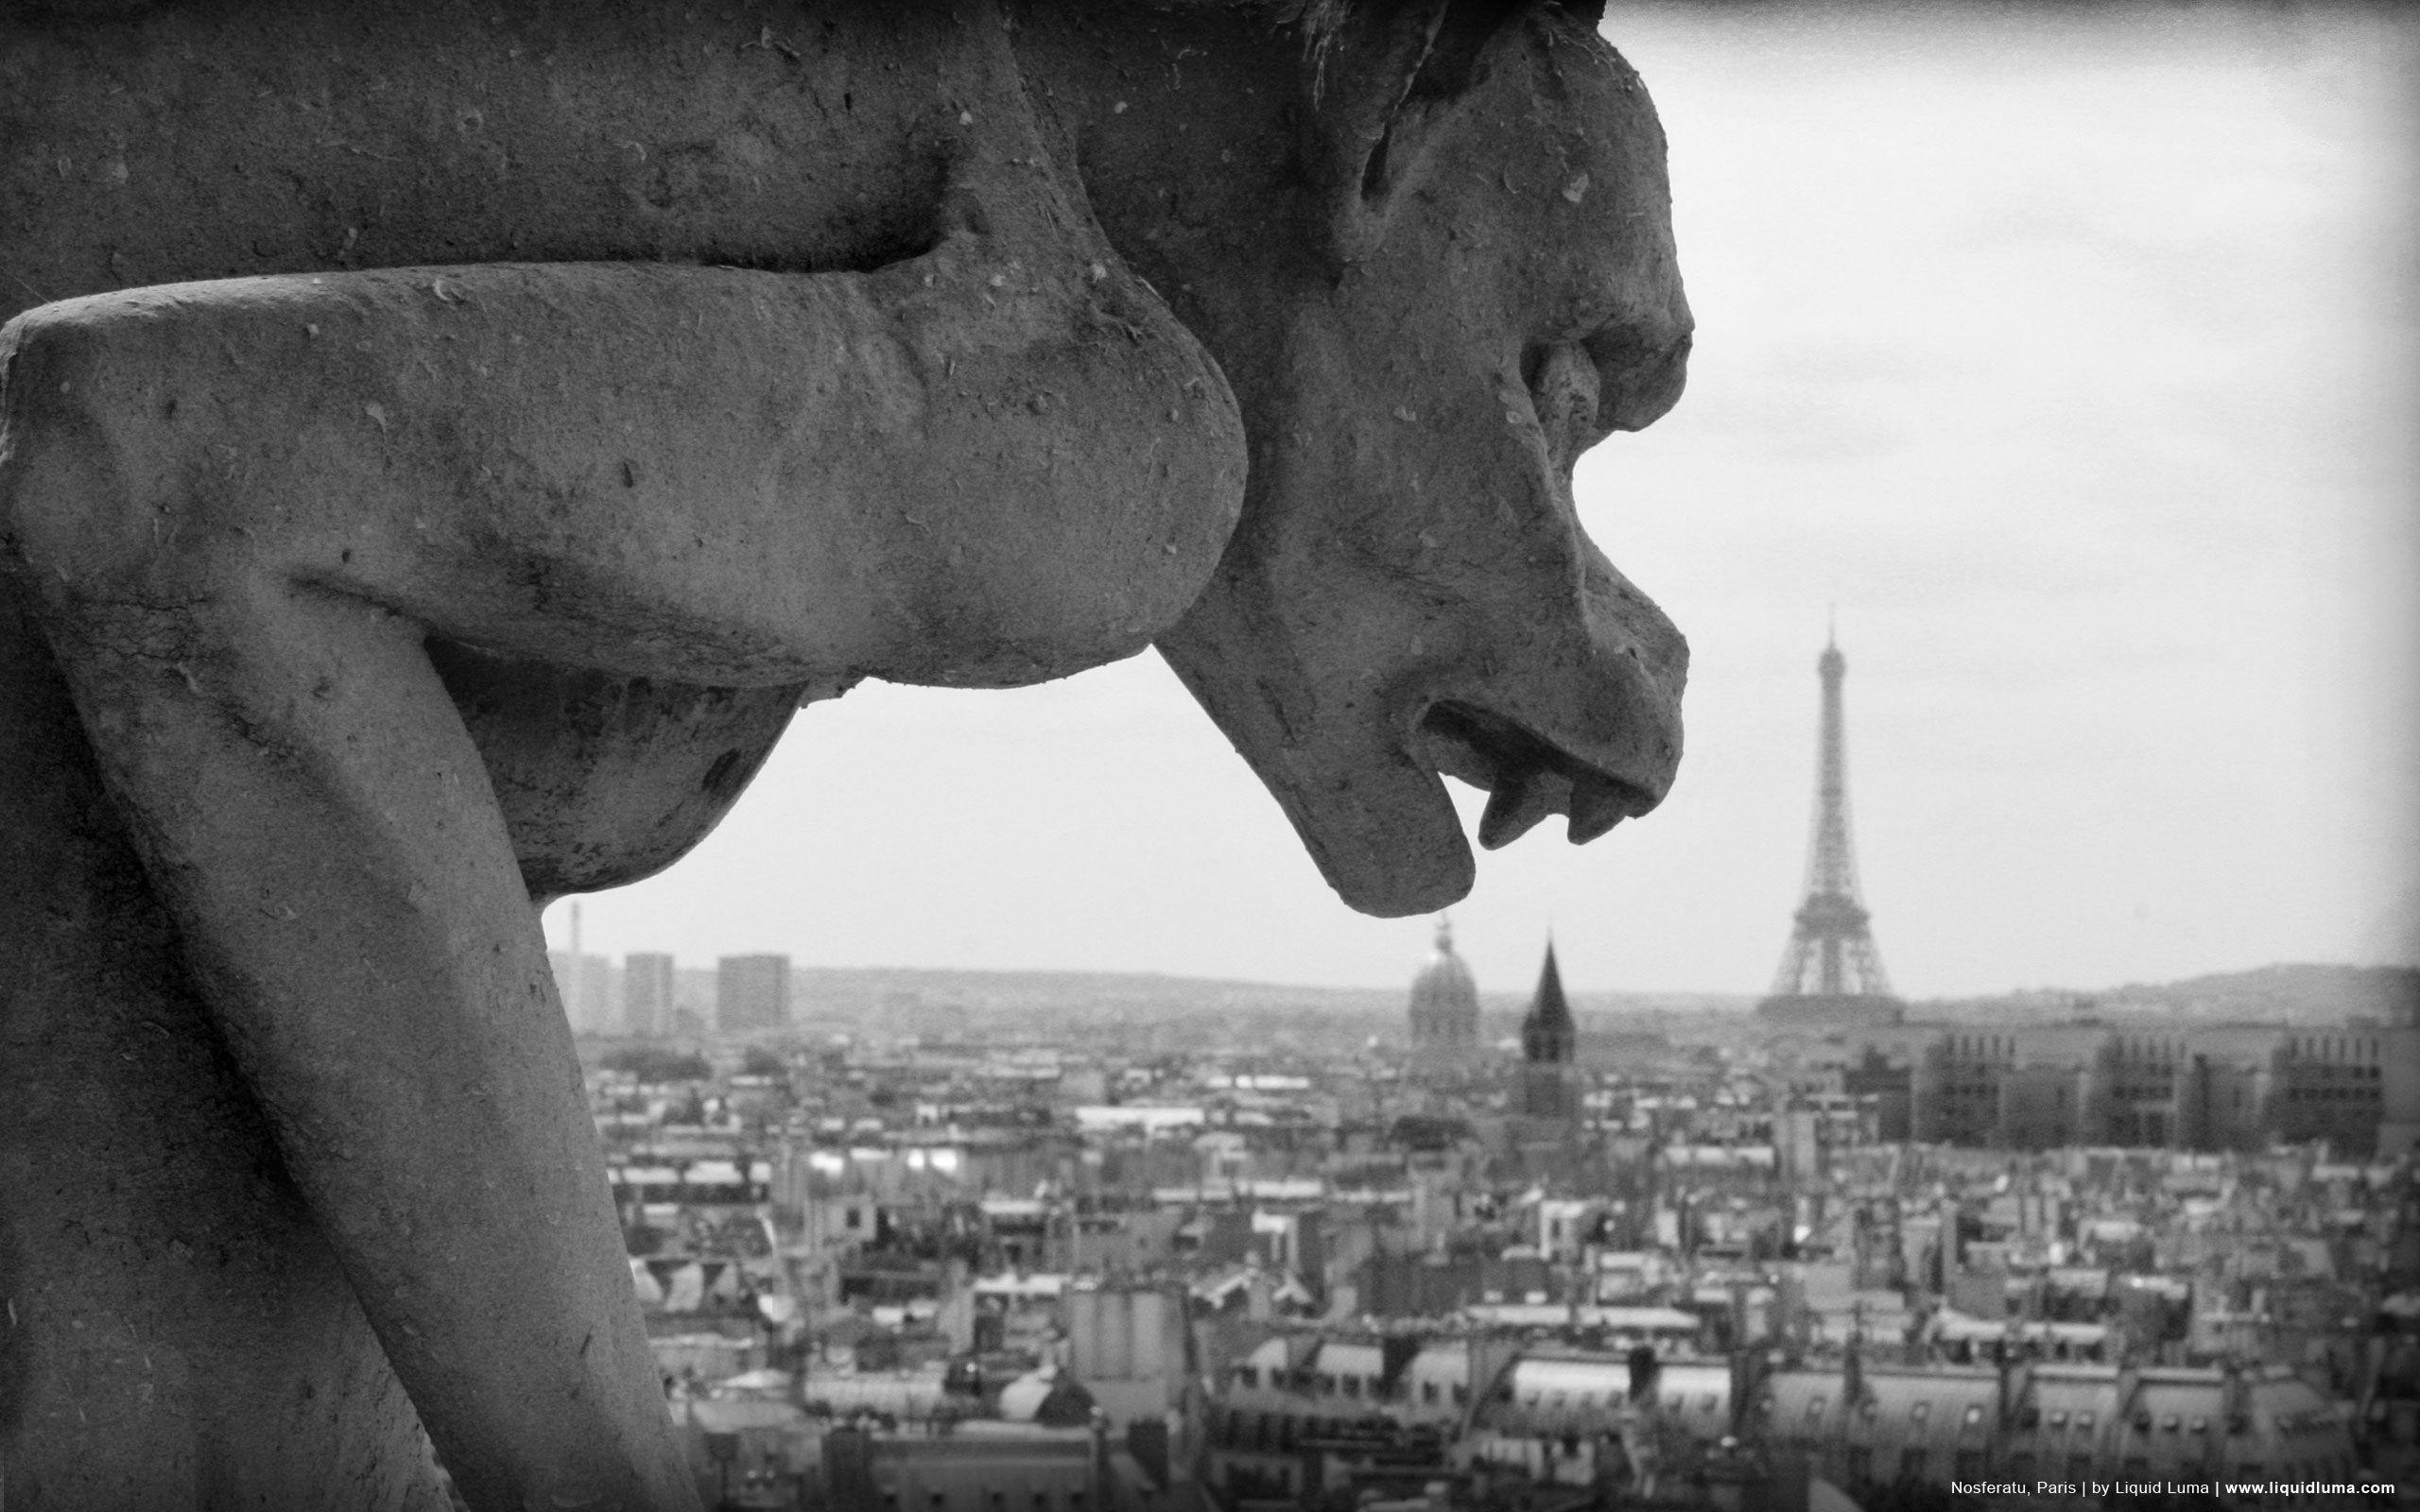 Paris grayscale gargoyle monochrome city skyline